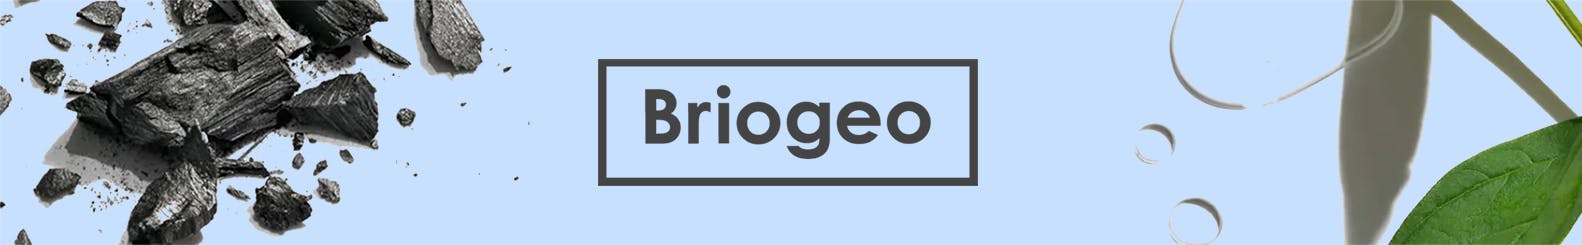 Briogeo logo